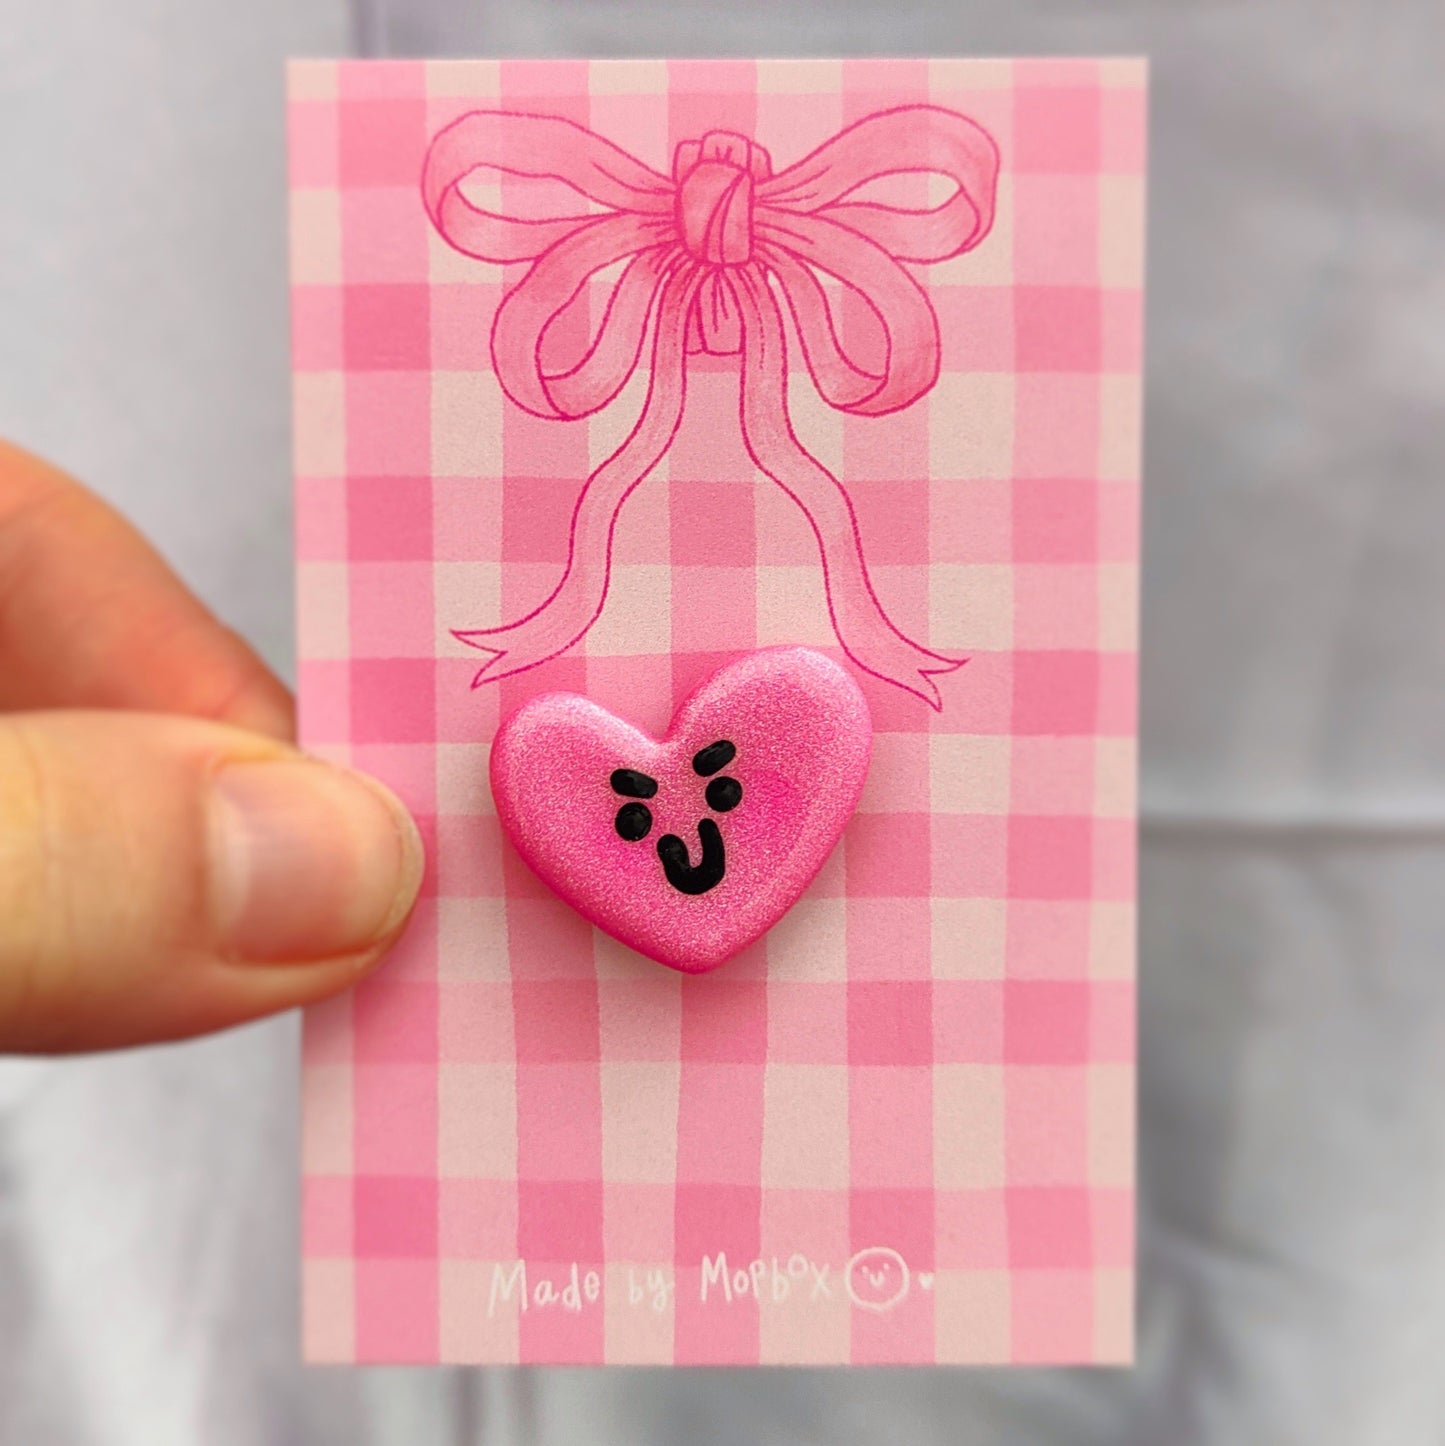 Love Heart Handmade Pin Badge -Spiteful Heart in Pink